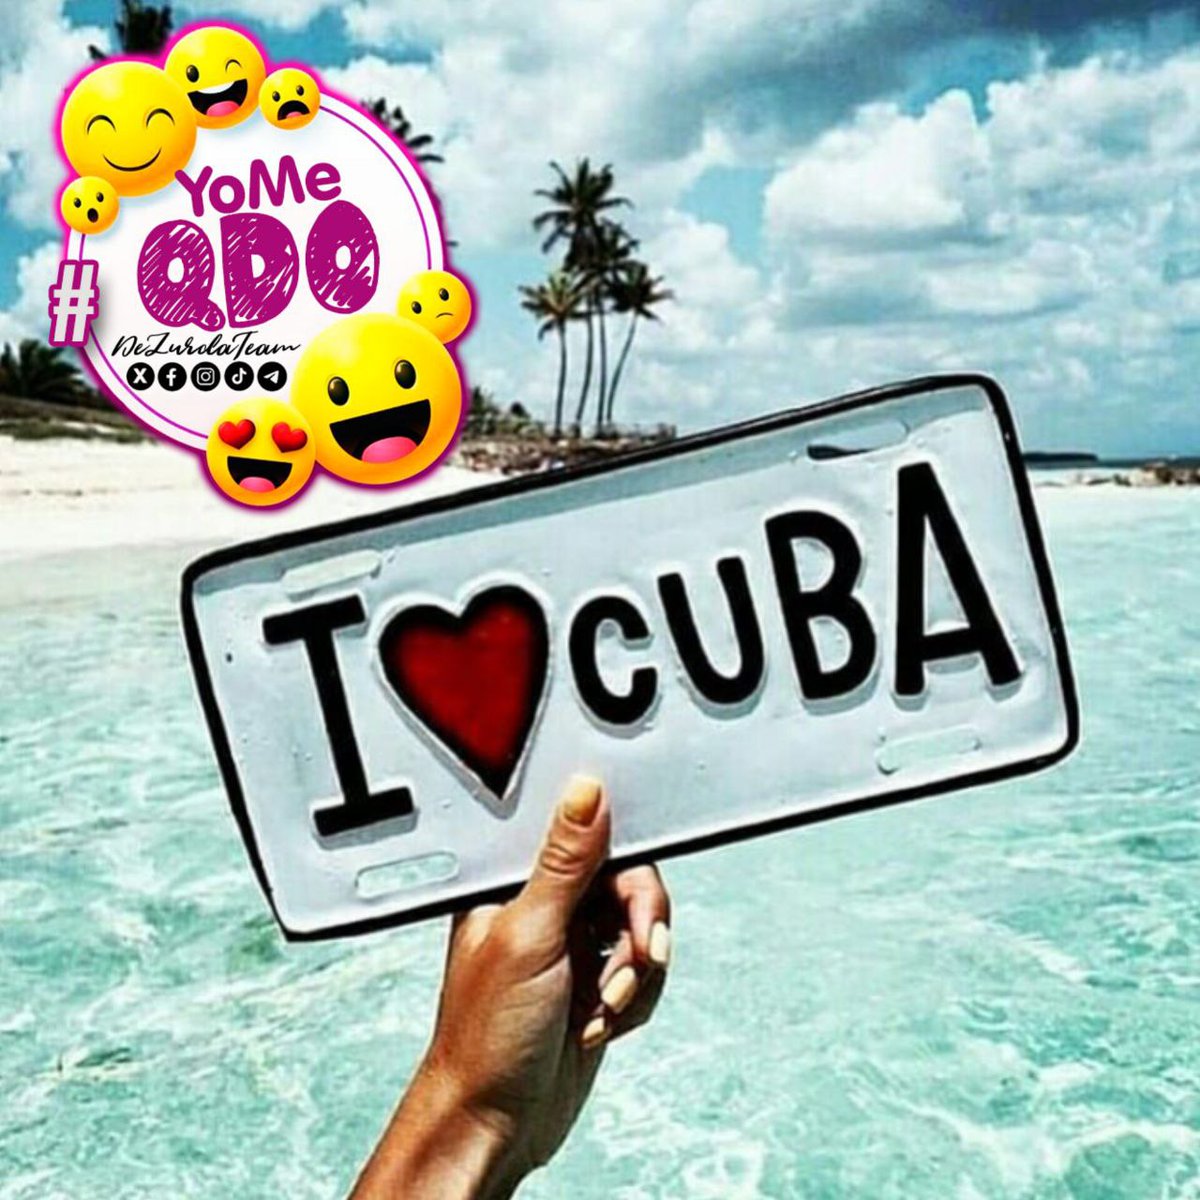 #YoMeQdo con mi Isla hermosa, #CubaViveyVence #GenteQueSuman
@DeZurdaTeam_ #DeZurdaTeam 🤝🐲